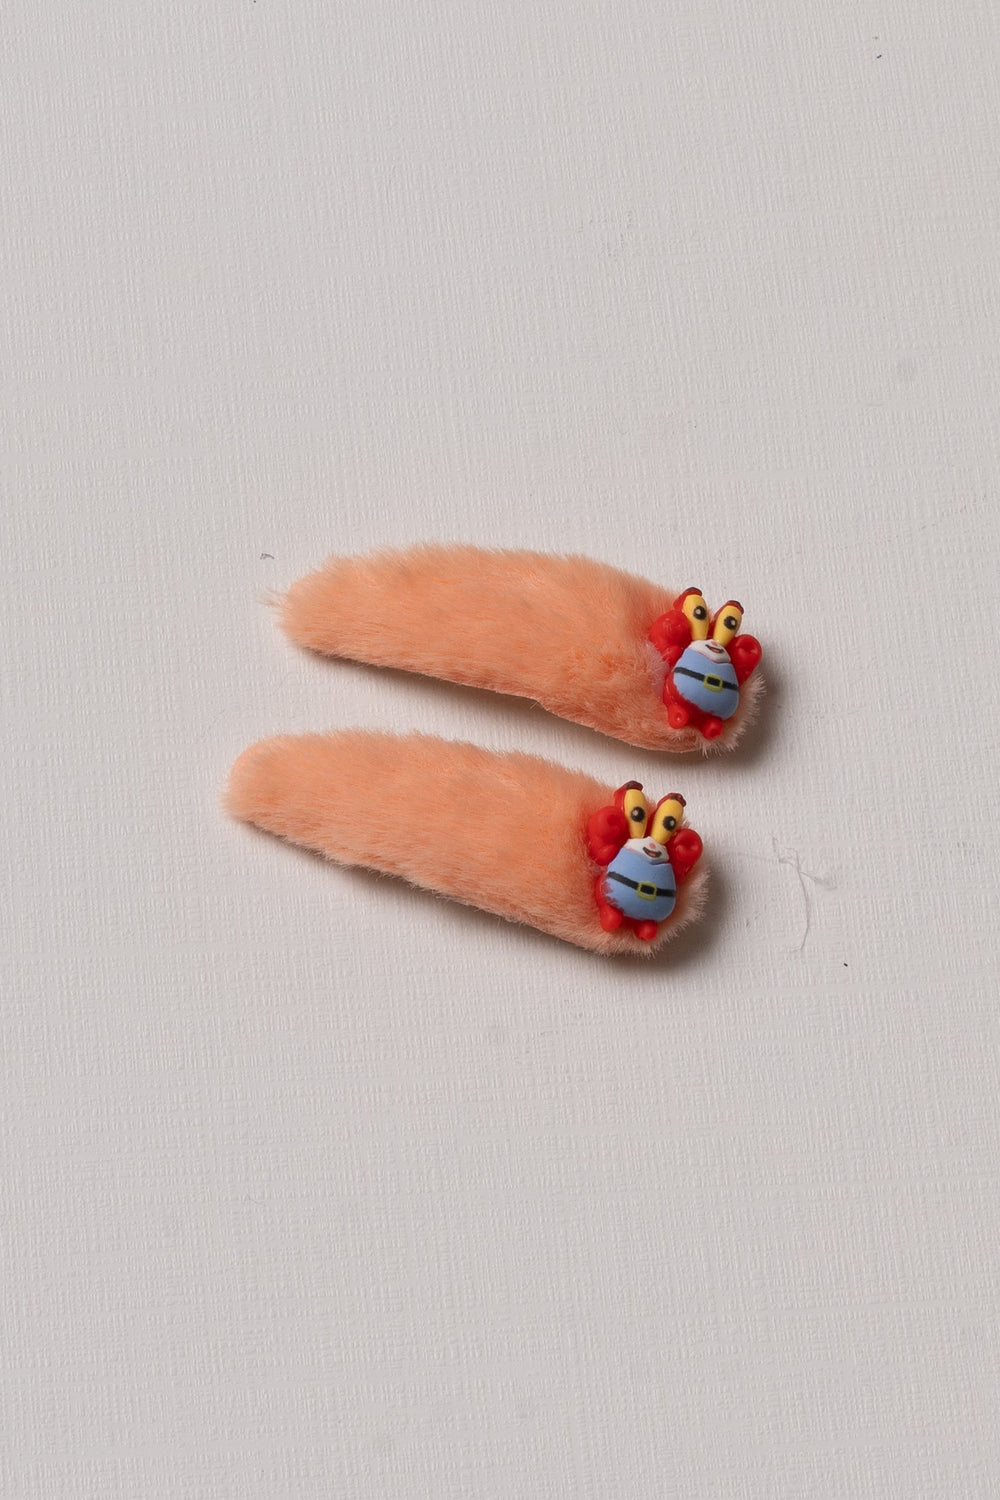 The Nesavu Tick Tac Clip Orange Keen Fuzzy Character Tick Tac Clips Nesavu Orange / Style 2 JHTT17B Soft Furry Animal Hair Clips | Cute Tick Tac Hair Accessories for Kids | The Nesavu